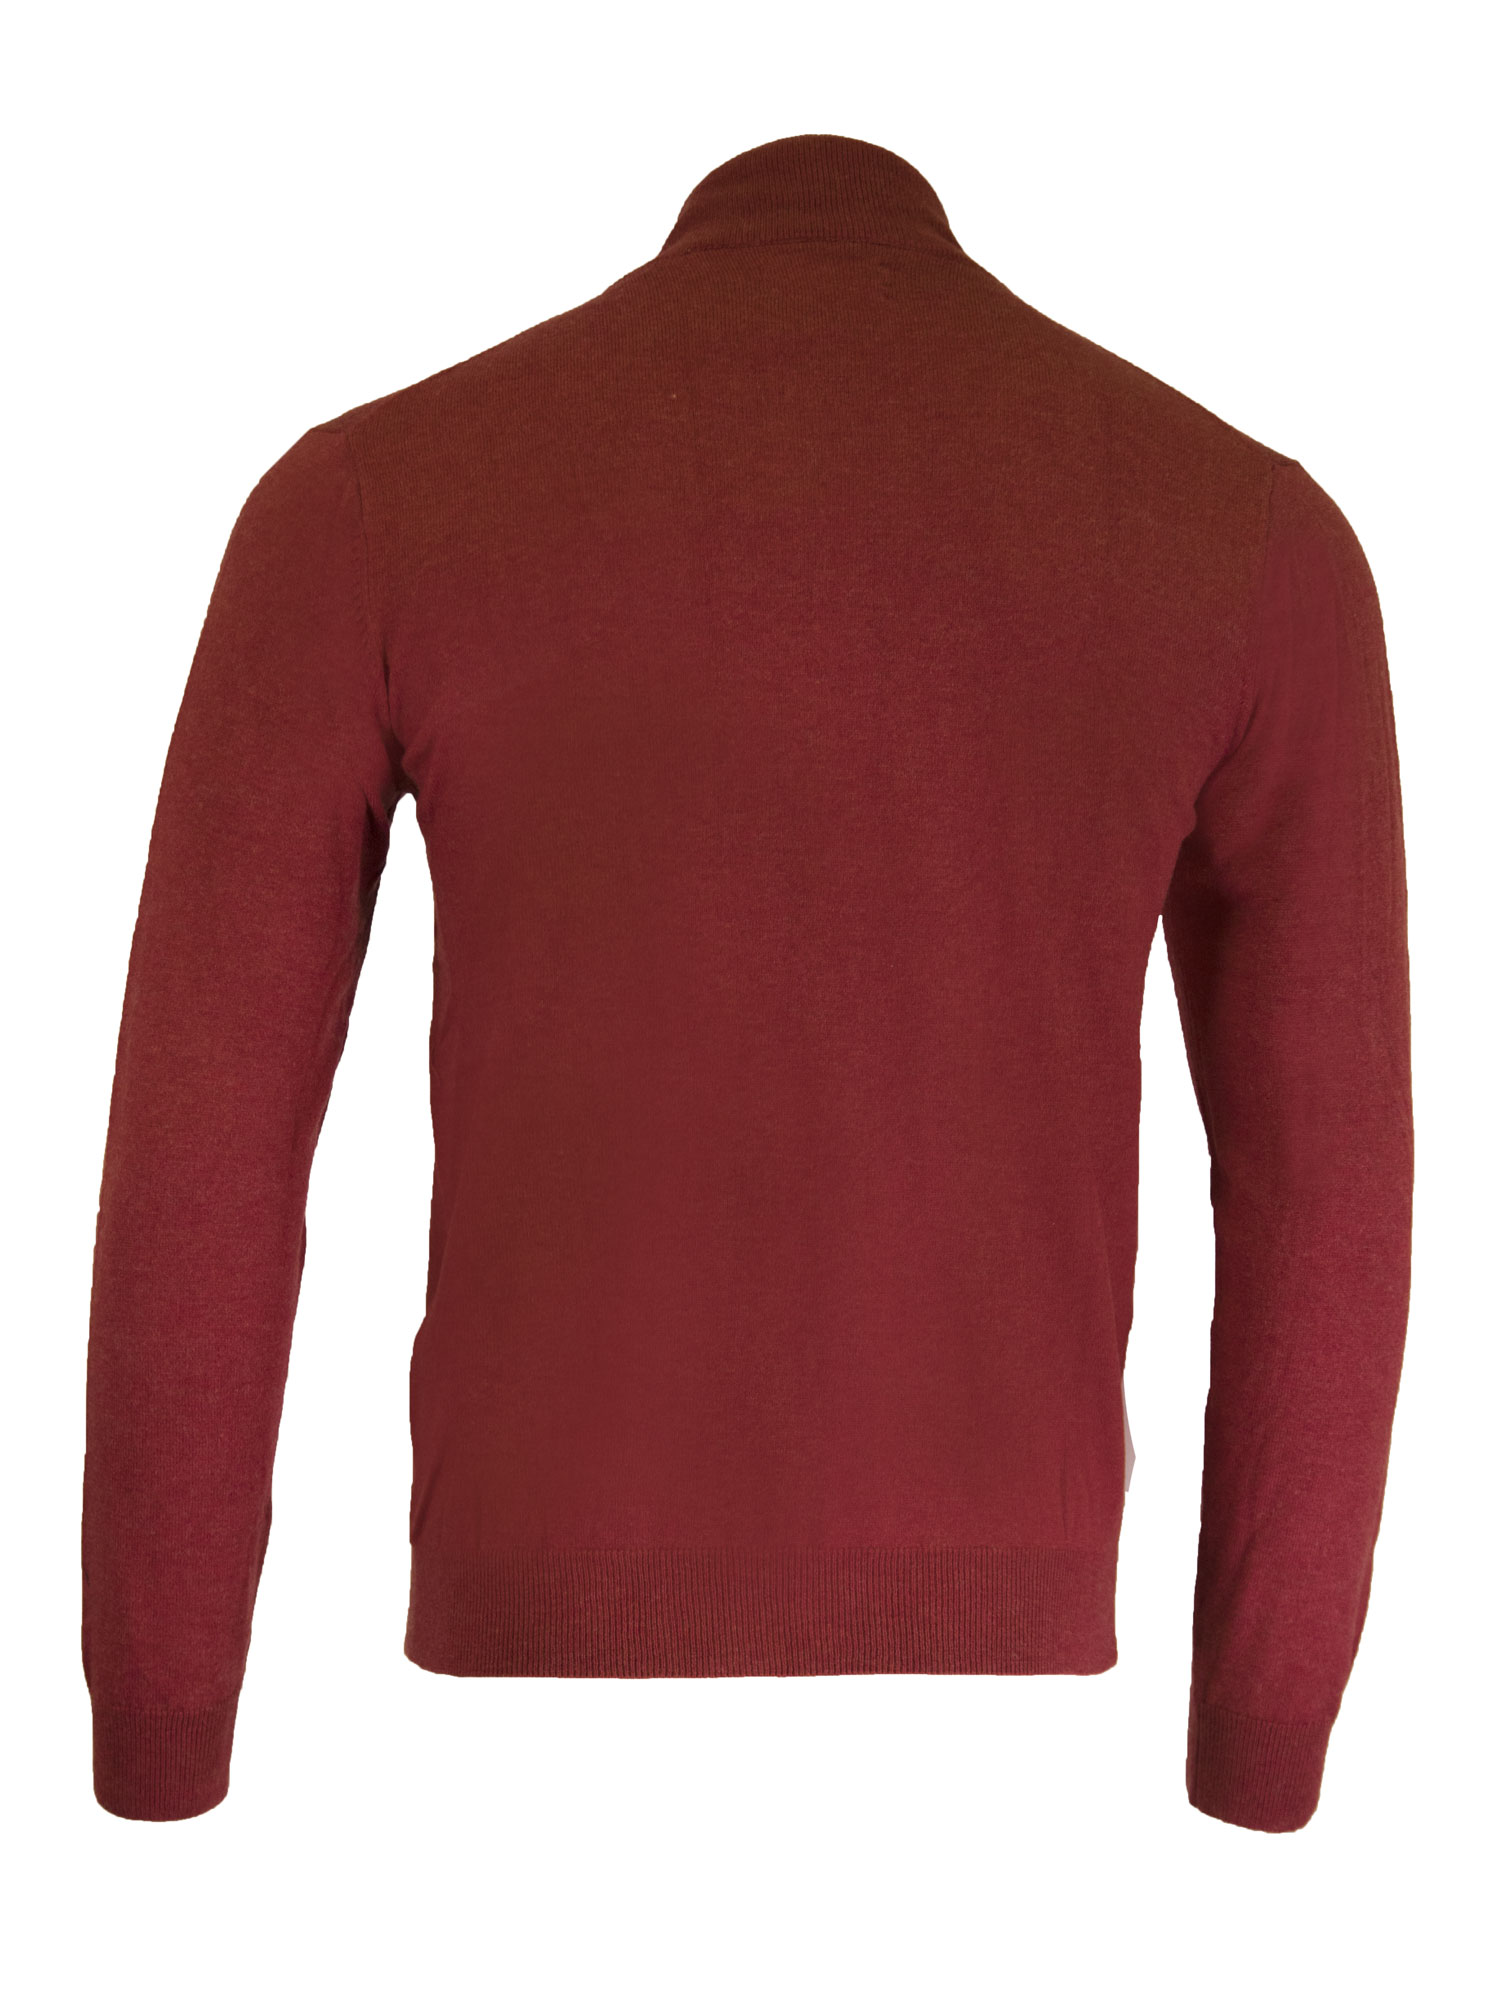 GANT Men's Bordeaux Melange Cotton Wool Full Zip Cardigan 83104 Size M ...